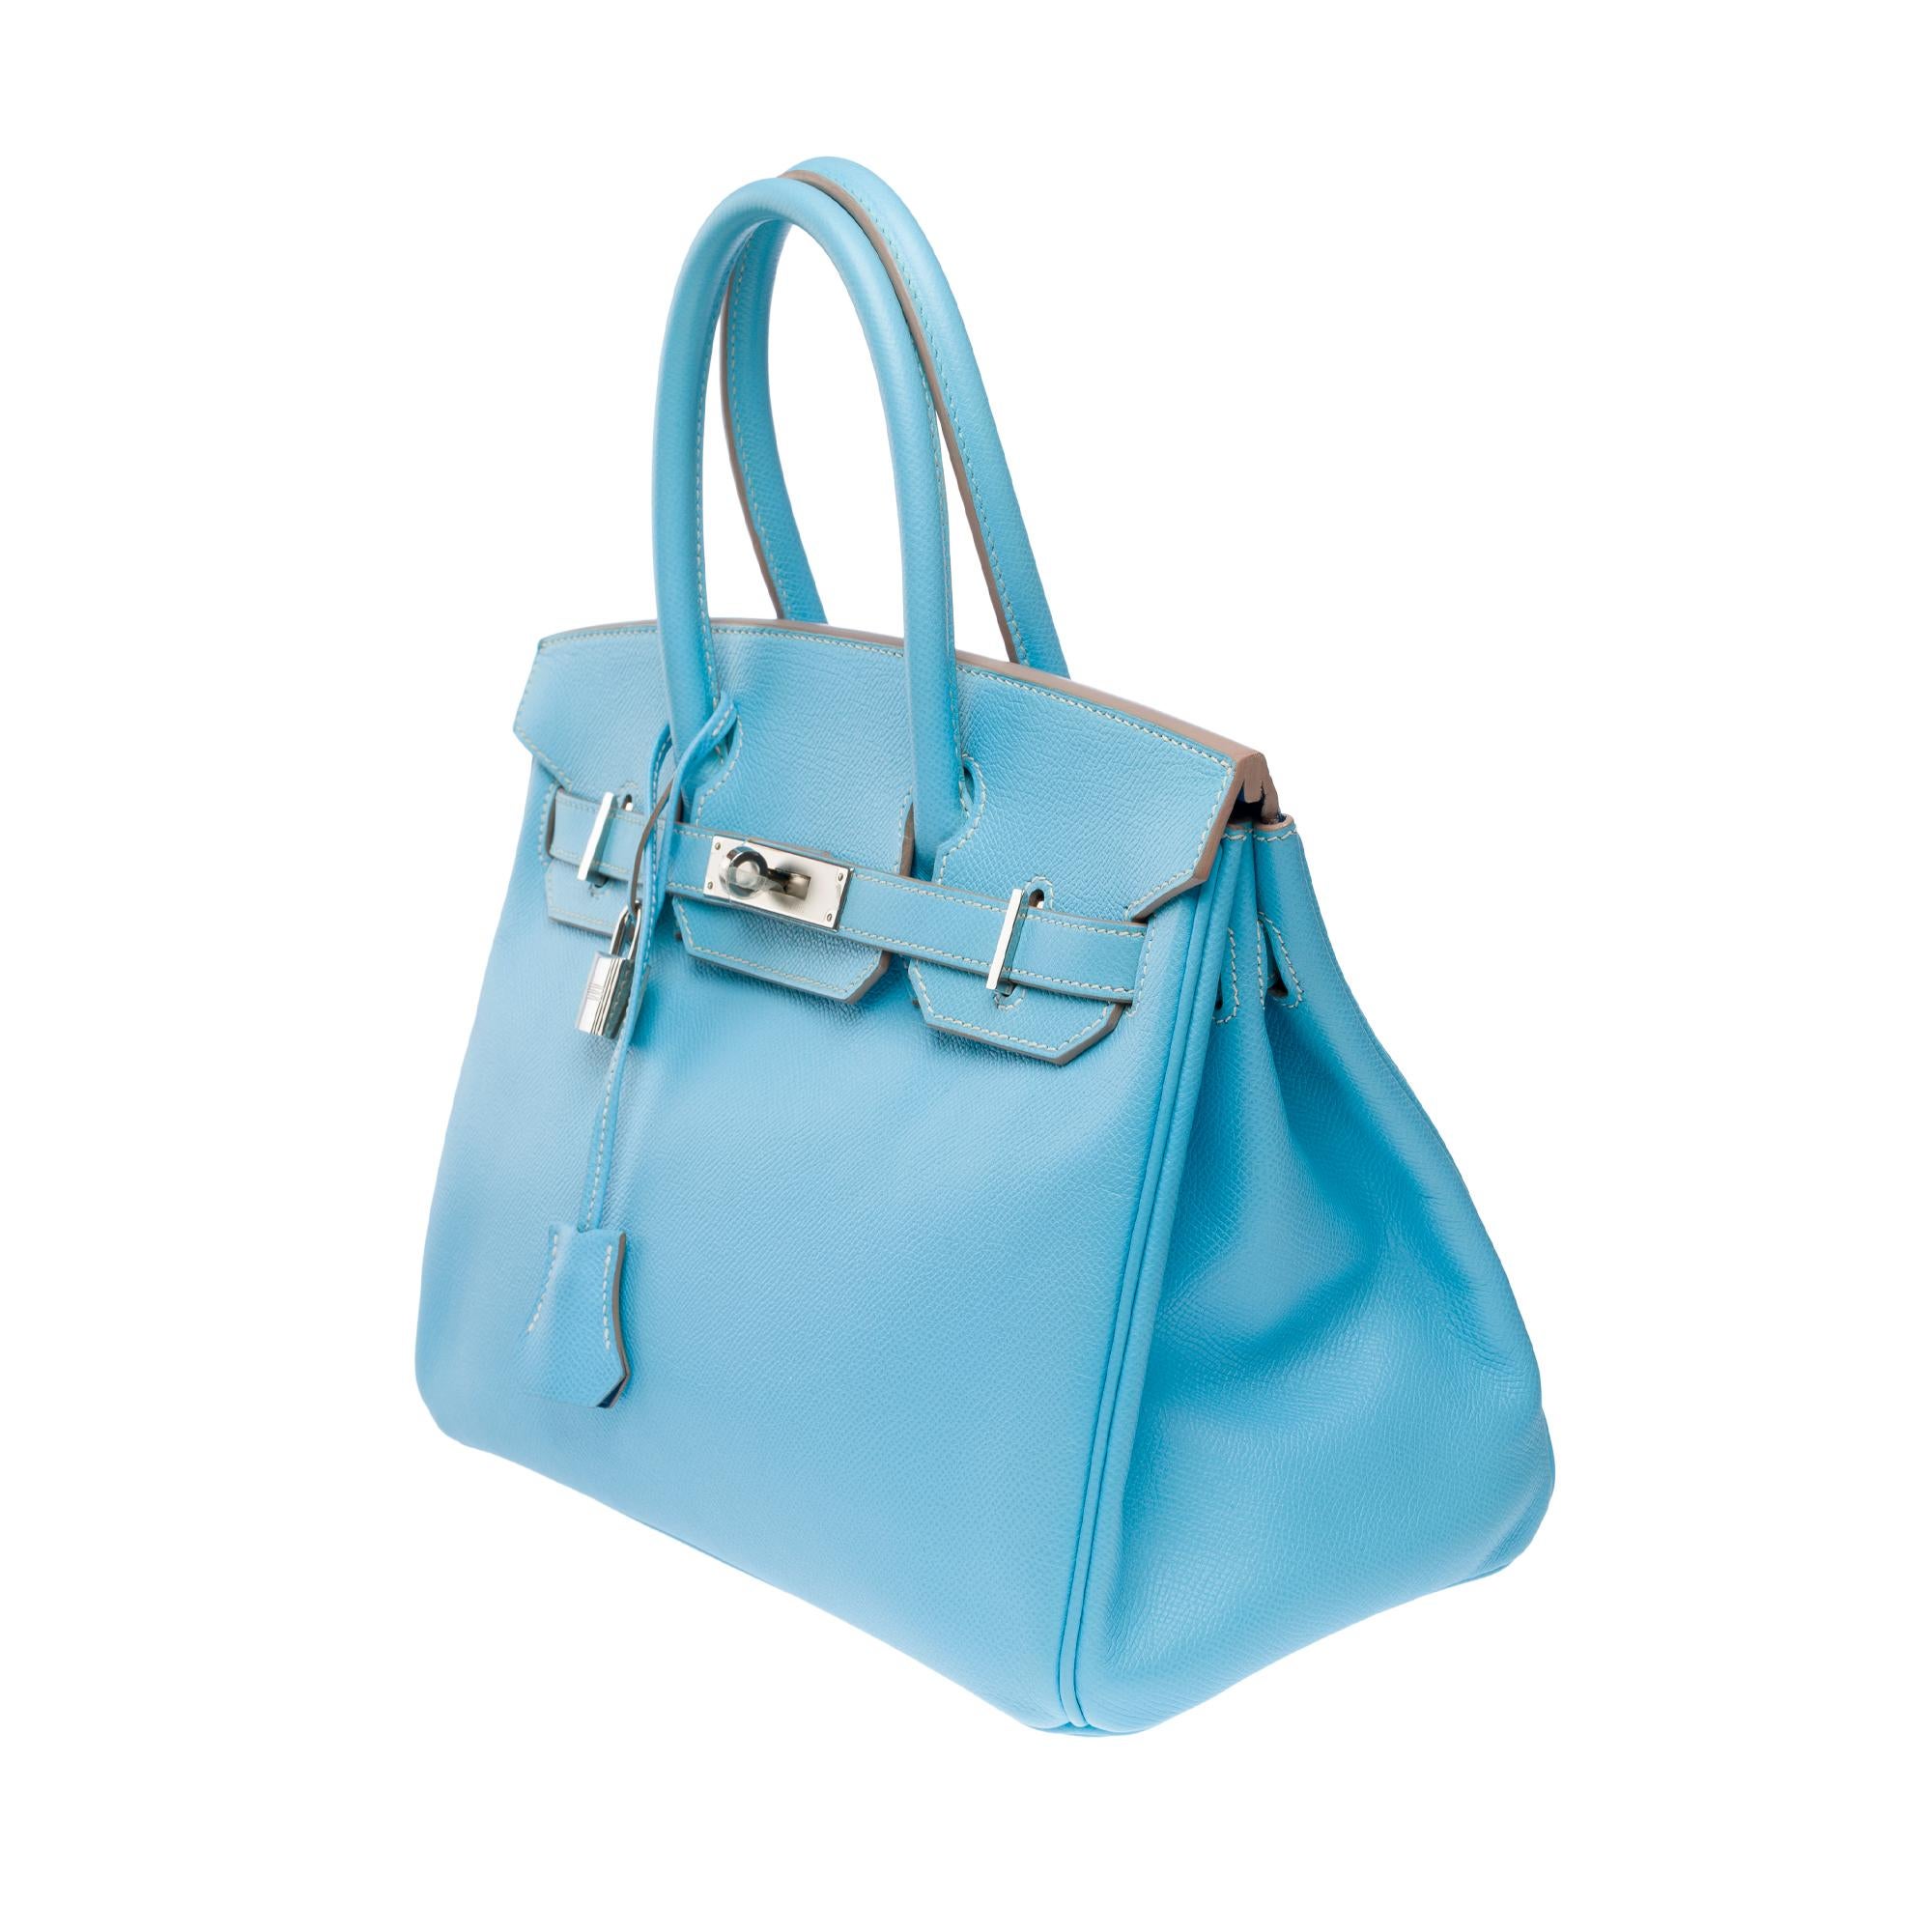 Rare Hermes Birkin 30 Candy Edition handbag in Celeste Blue Epsom leather, SHW 2